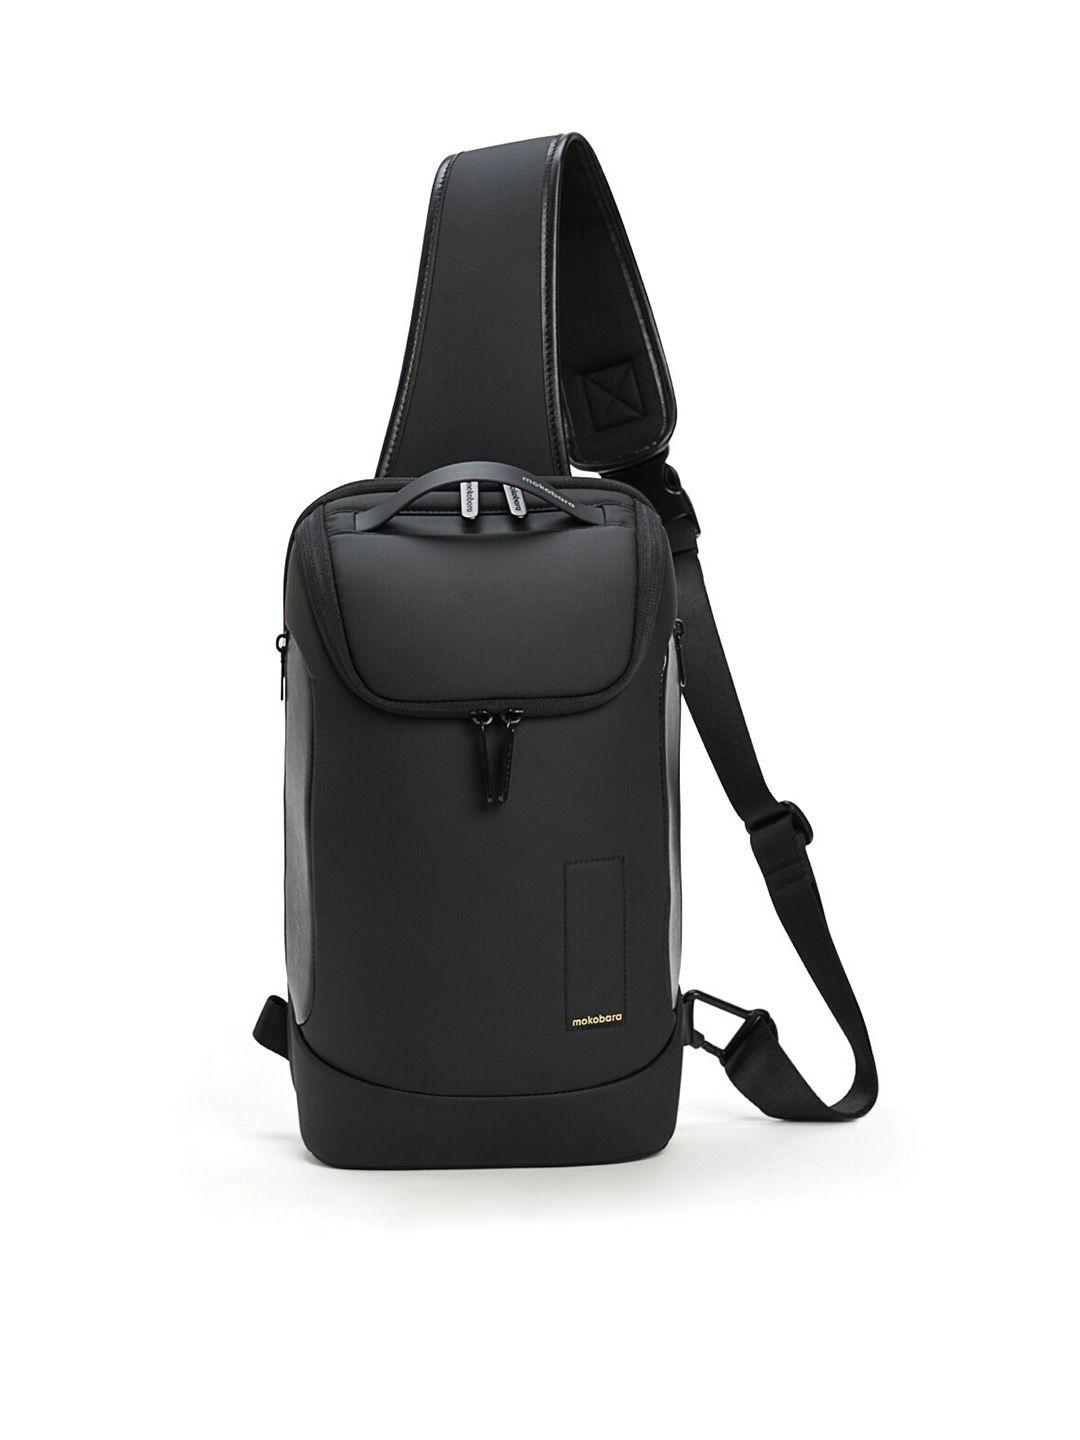 mokobara crossbody meduim backpack